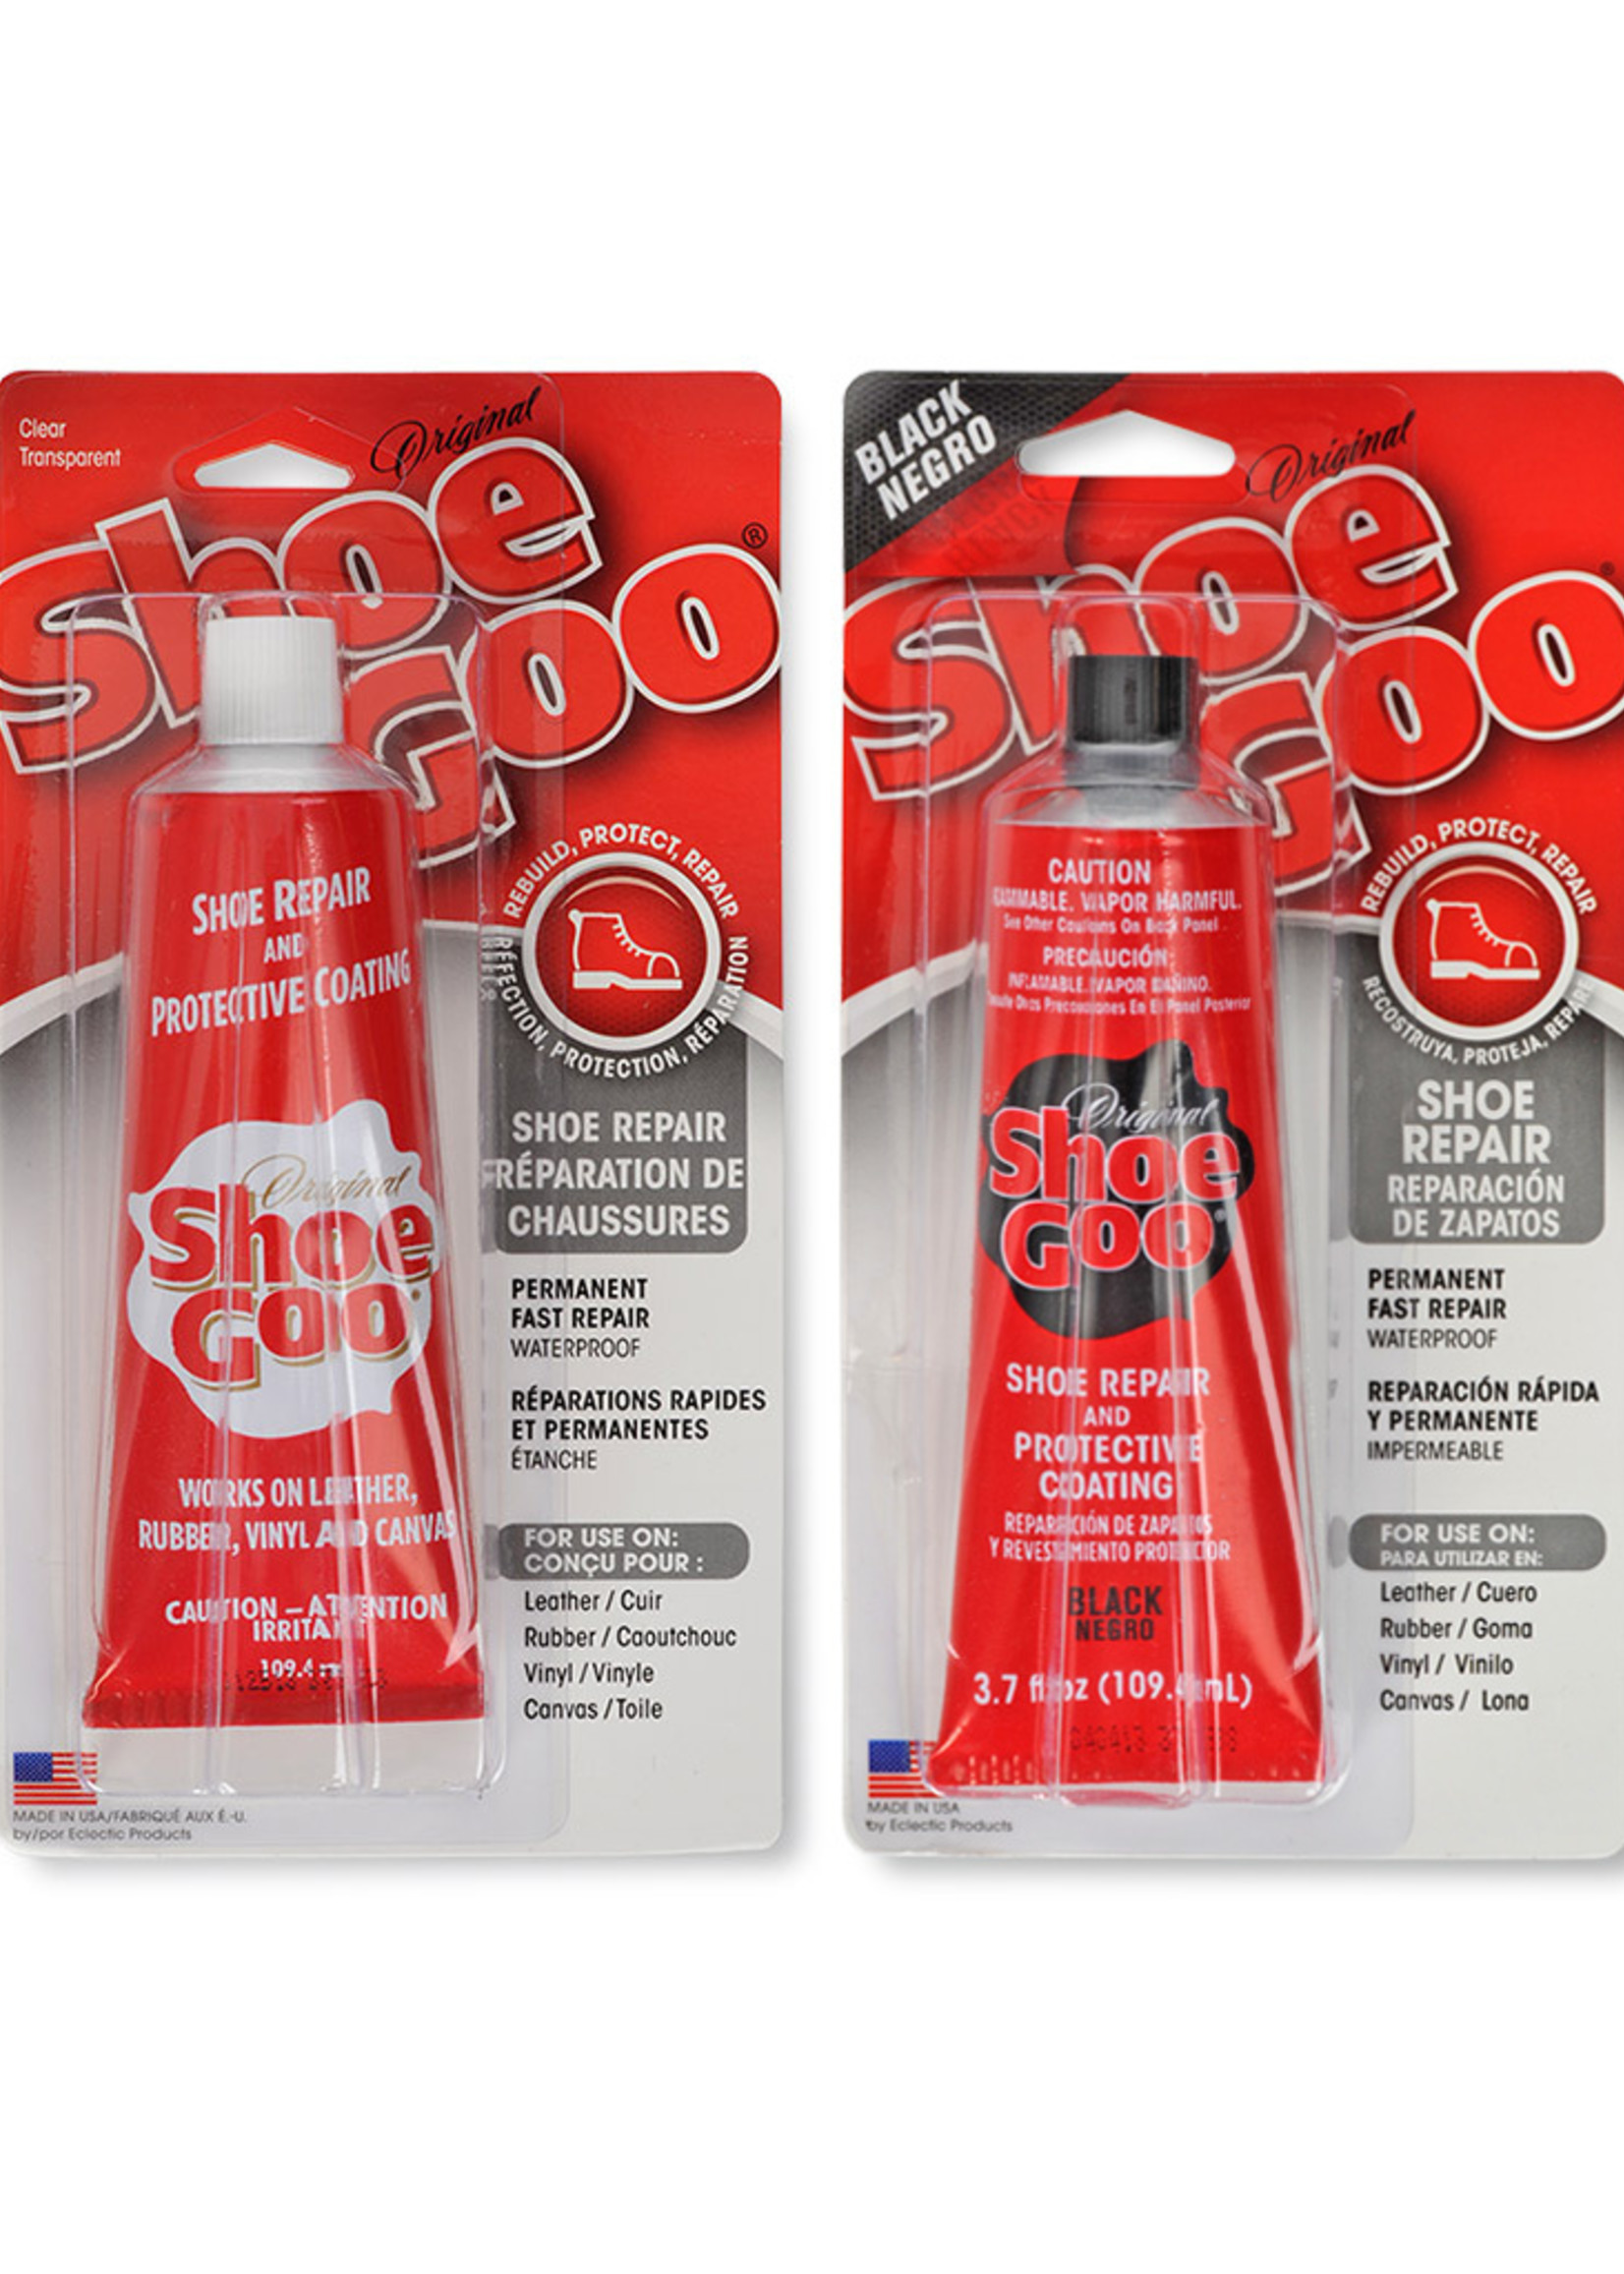 Shoe Goo Shoe Goo 109.4 ml Mixed 2-Pack with 10% Discount